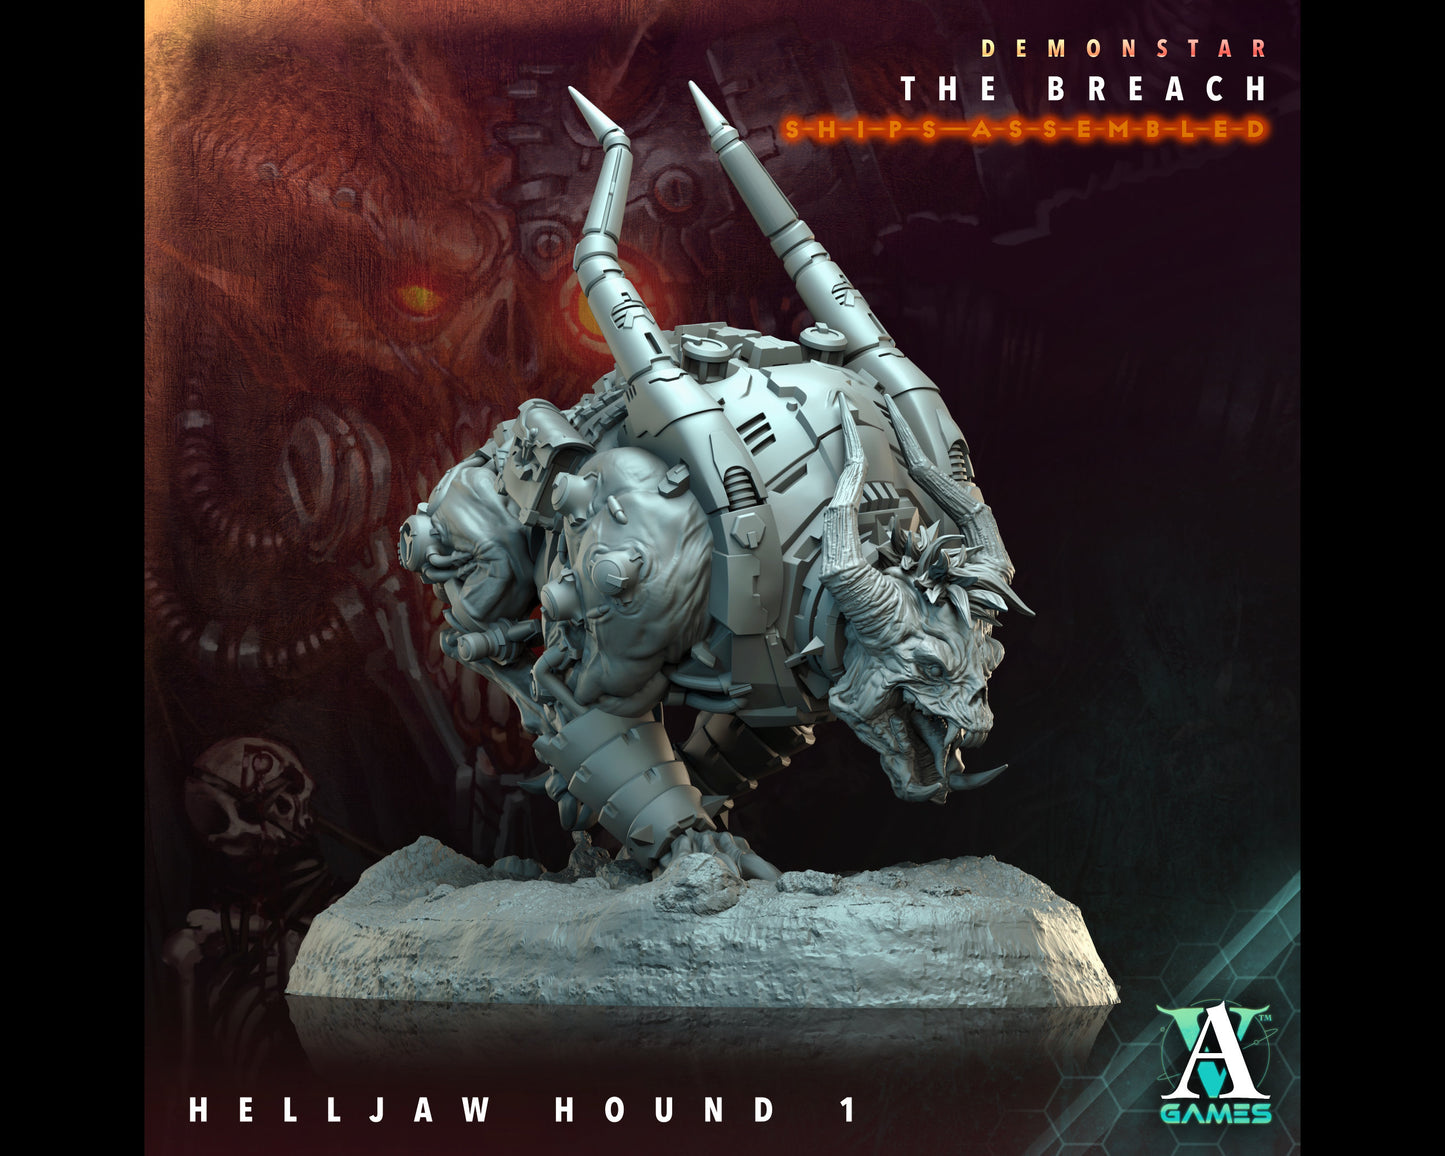 Helljaw Hound 1 - Demonstar: The Breach - Highly Detailed Resin 8k 3D Printed Miniature